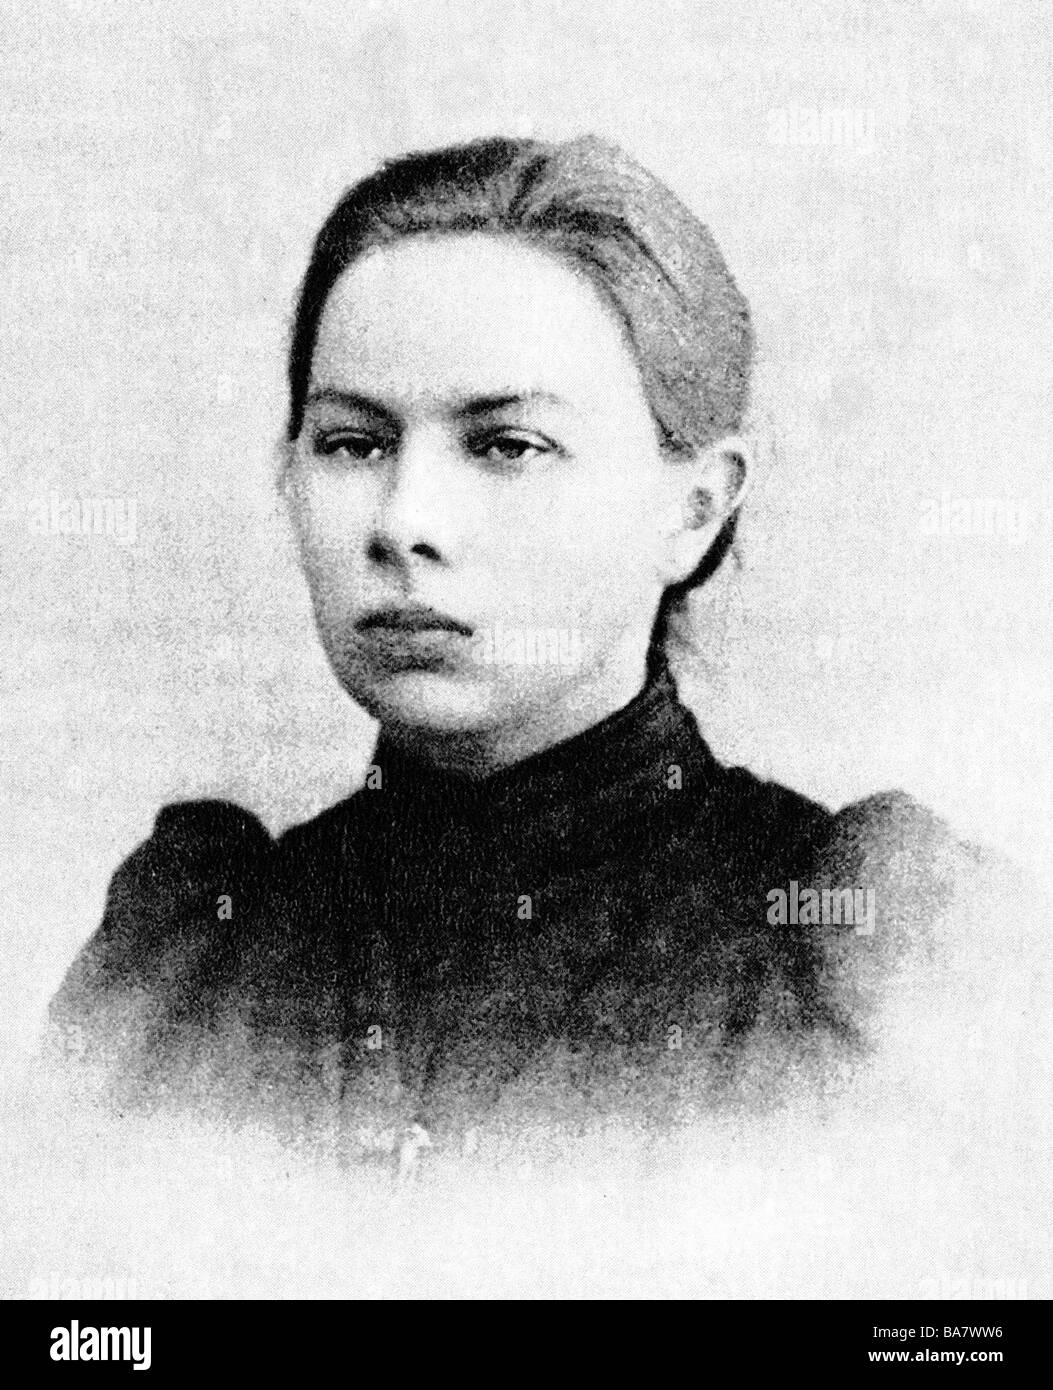 Krupskaja, Nadeschda, 26.2.1869 - 27.2.1939, Sowjetrevolutionär, Frau von Lenin, Porträt, 1895, Stockfoto